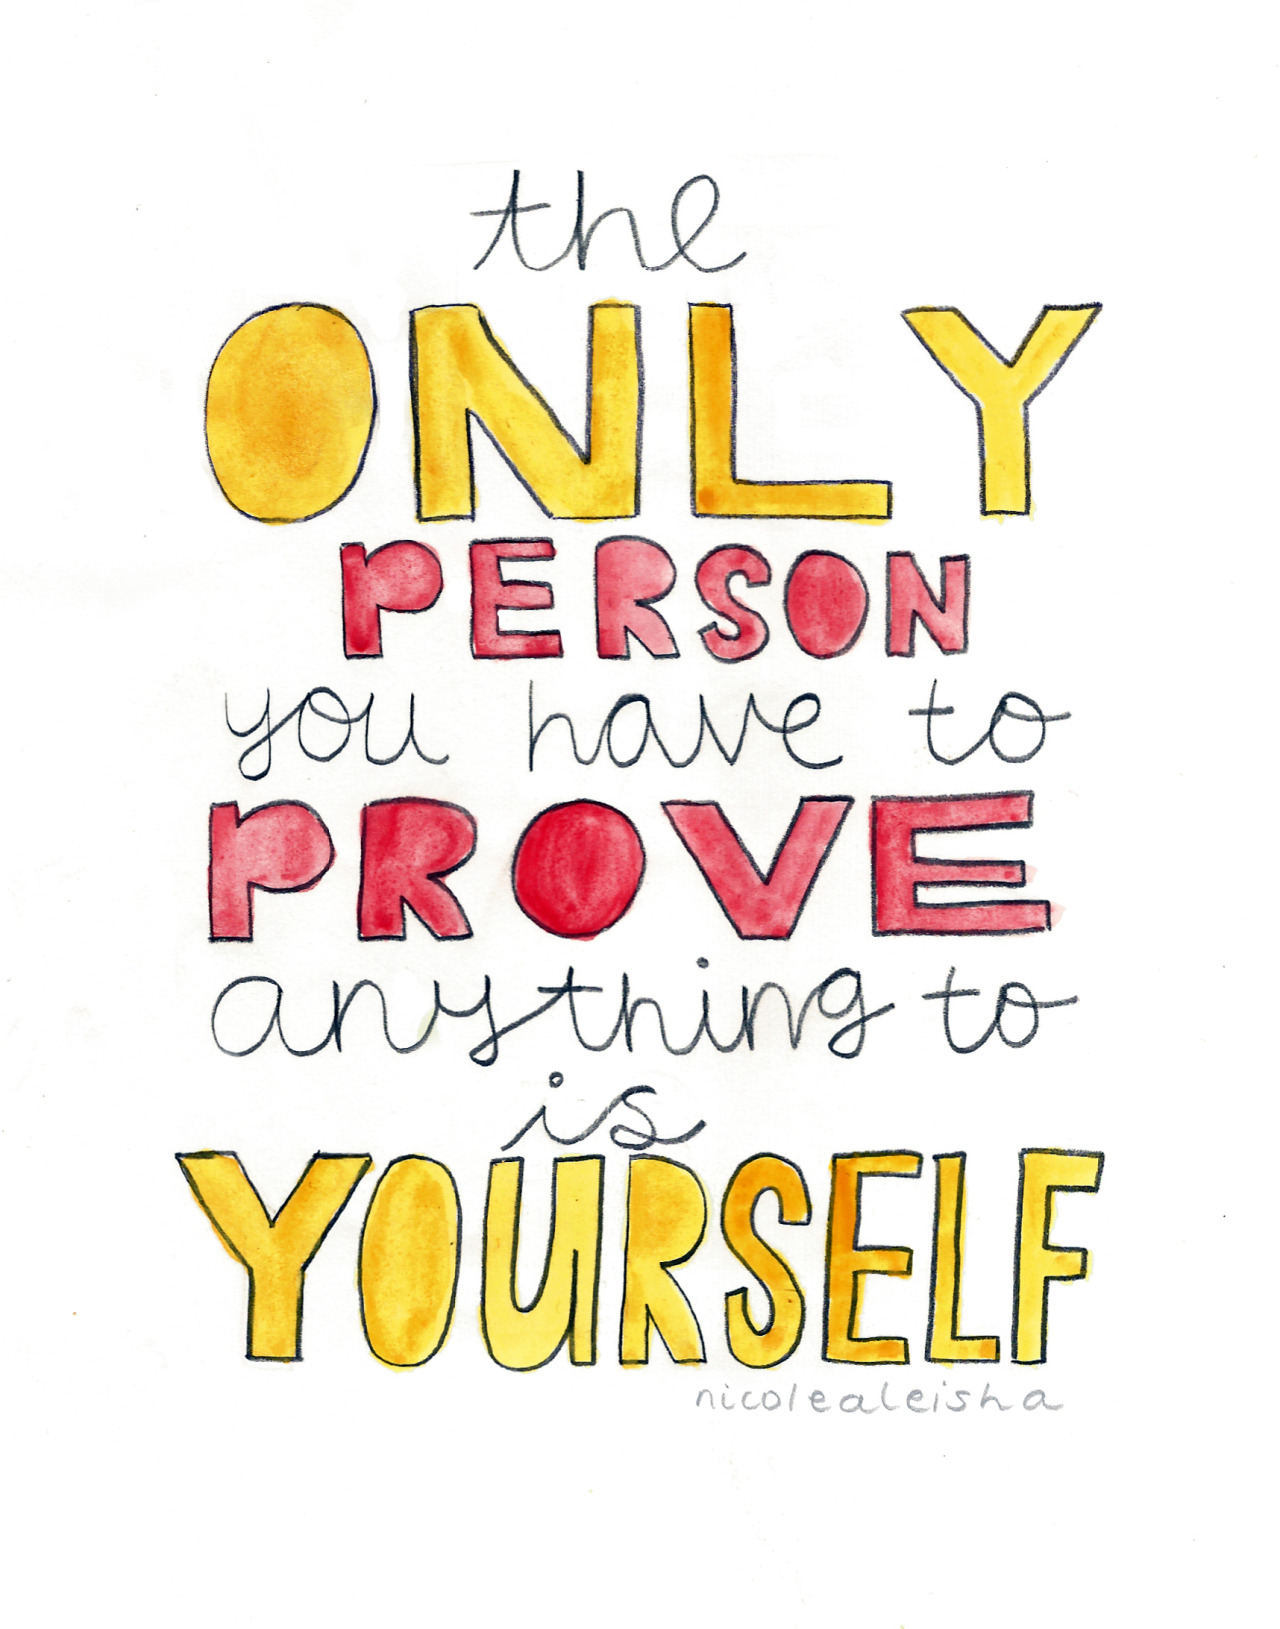 Prove yourself